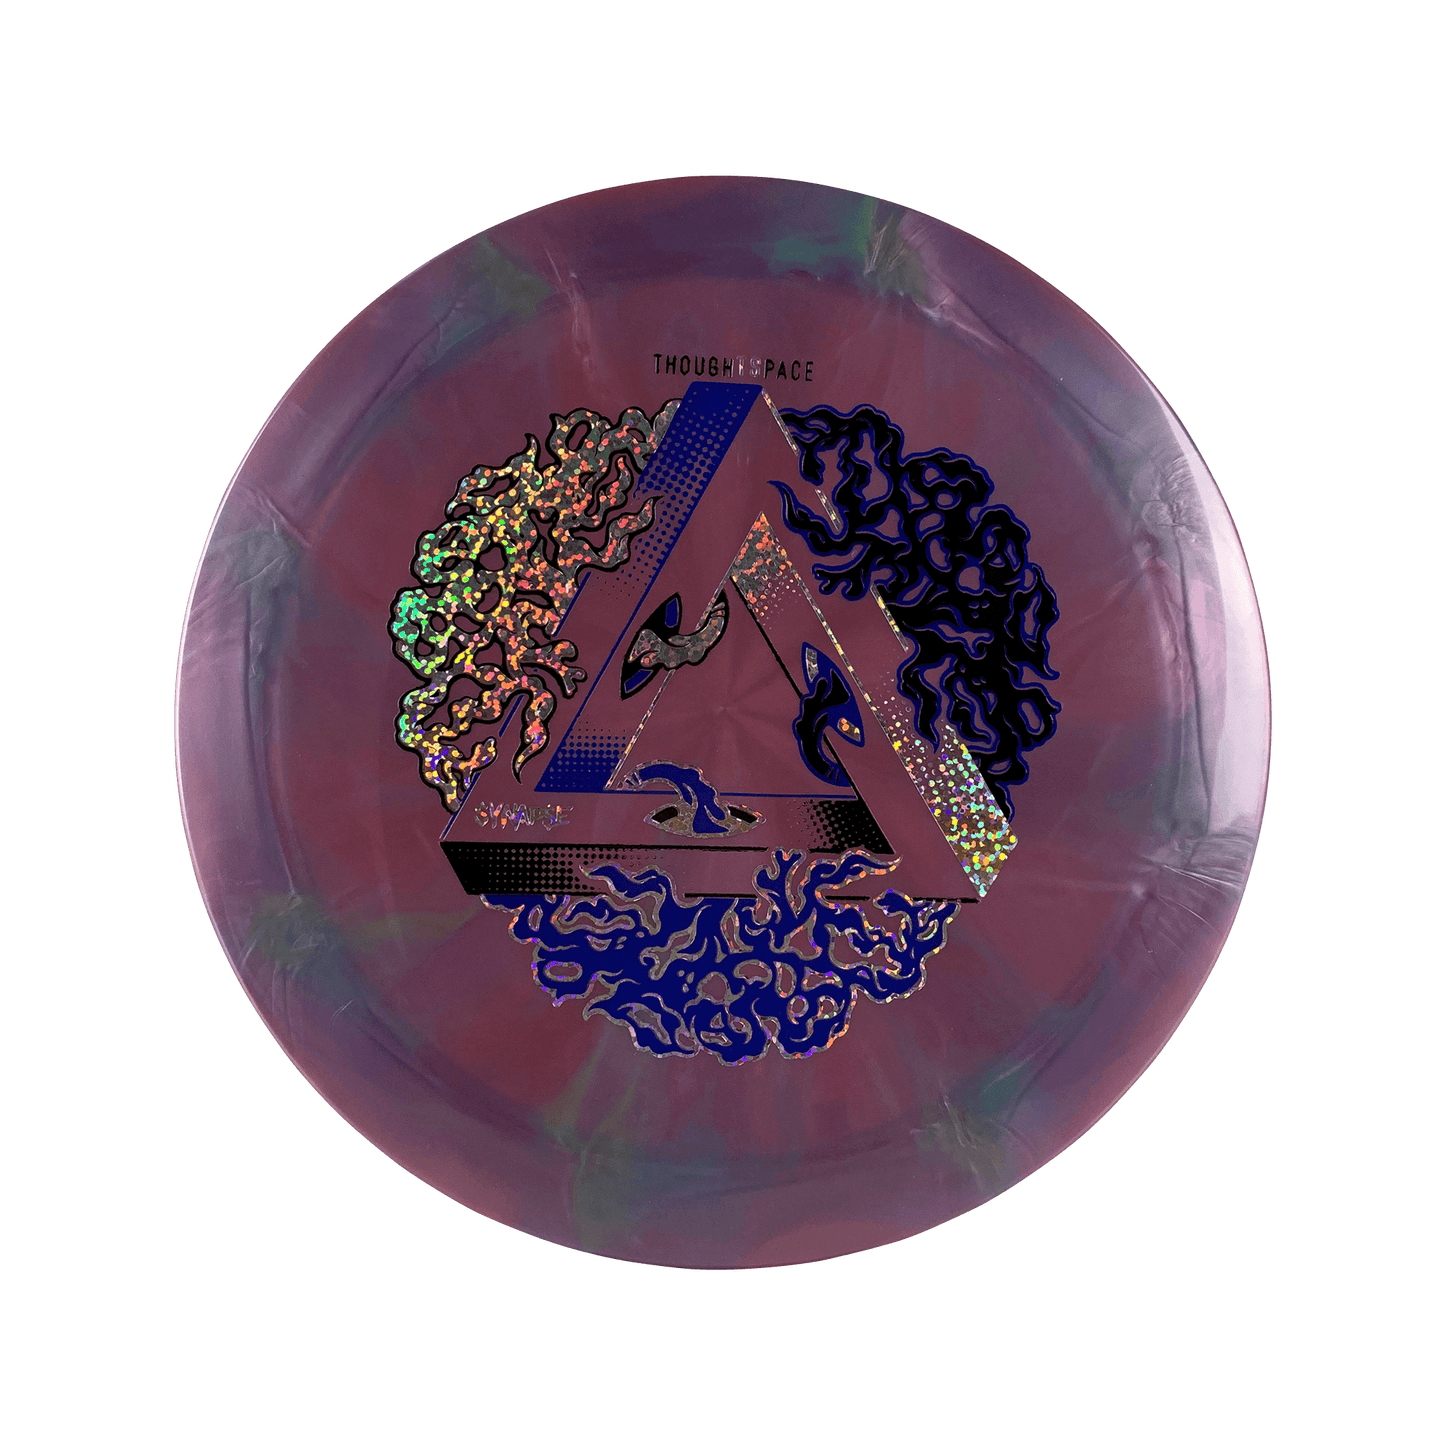 Nebula Aura Synapse Disc Thought Space Athletics multi / purple 175 